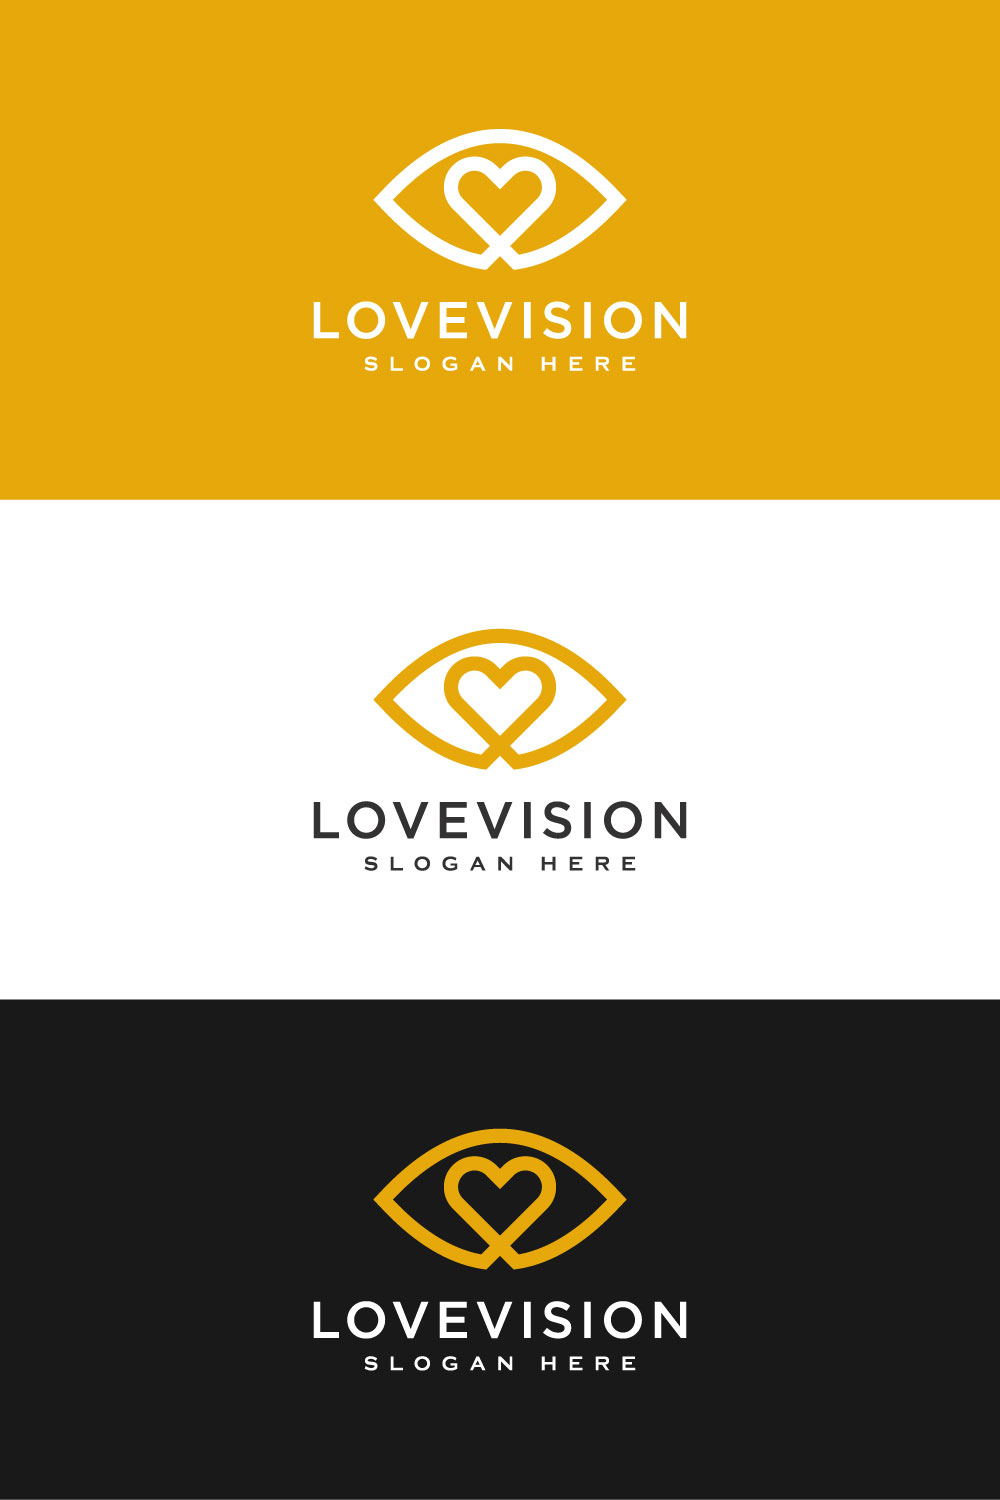 Love Vision Logo Vector Line Style Pinterest Image.